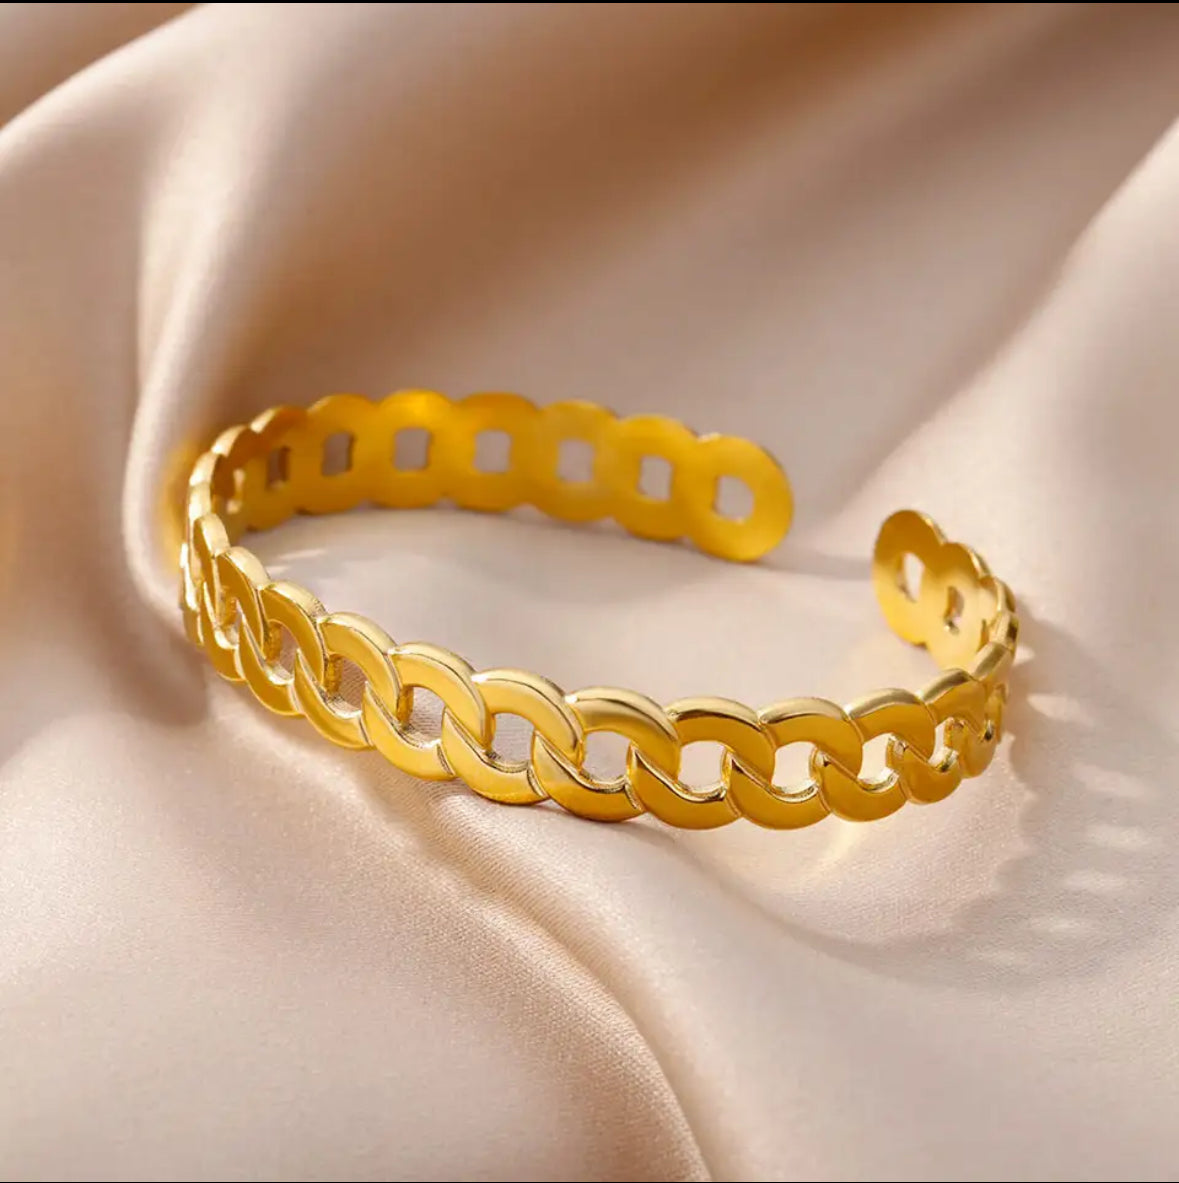 Adjustable Bracelets, Bangles made of 316L Stainless Steel in Gold